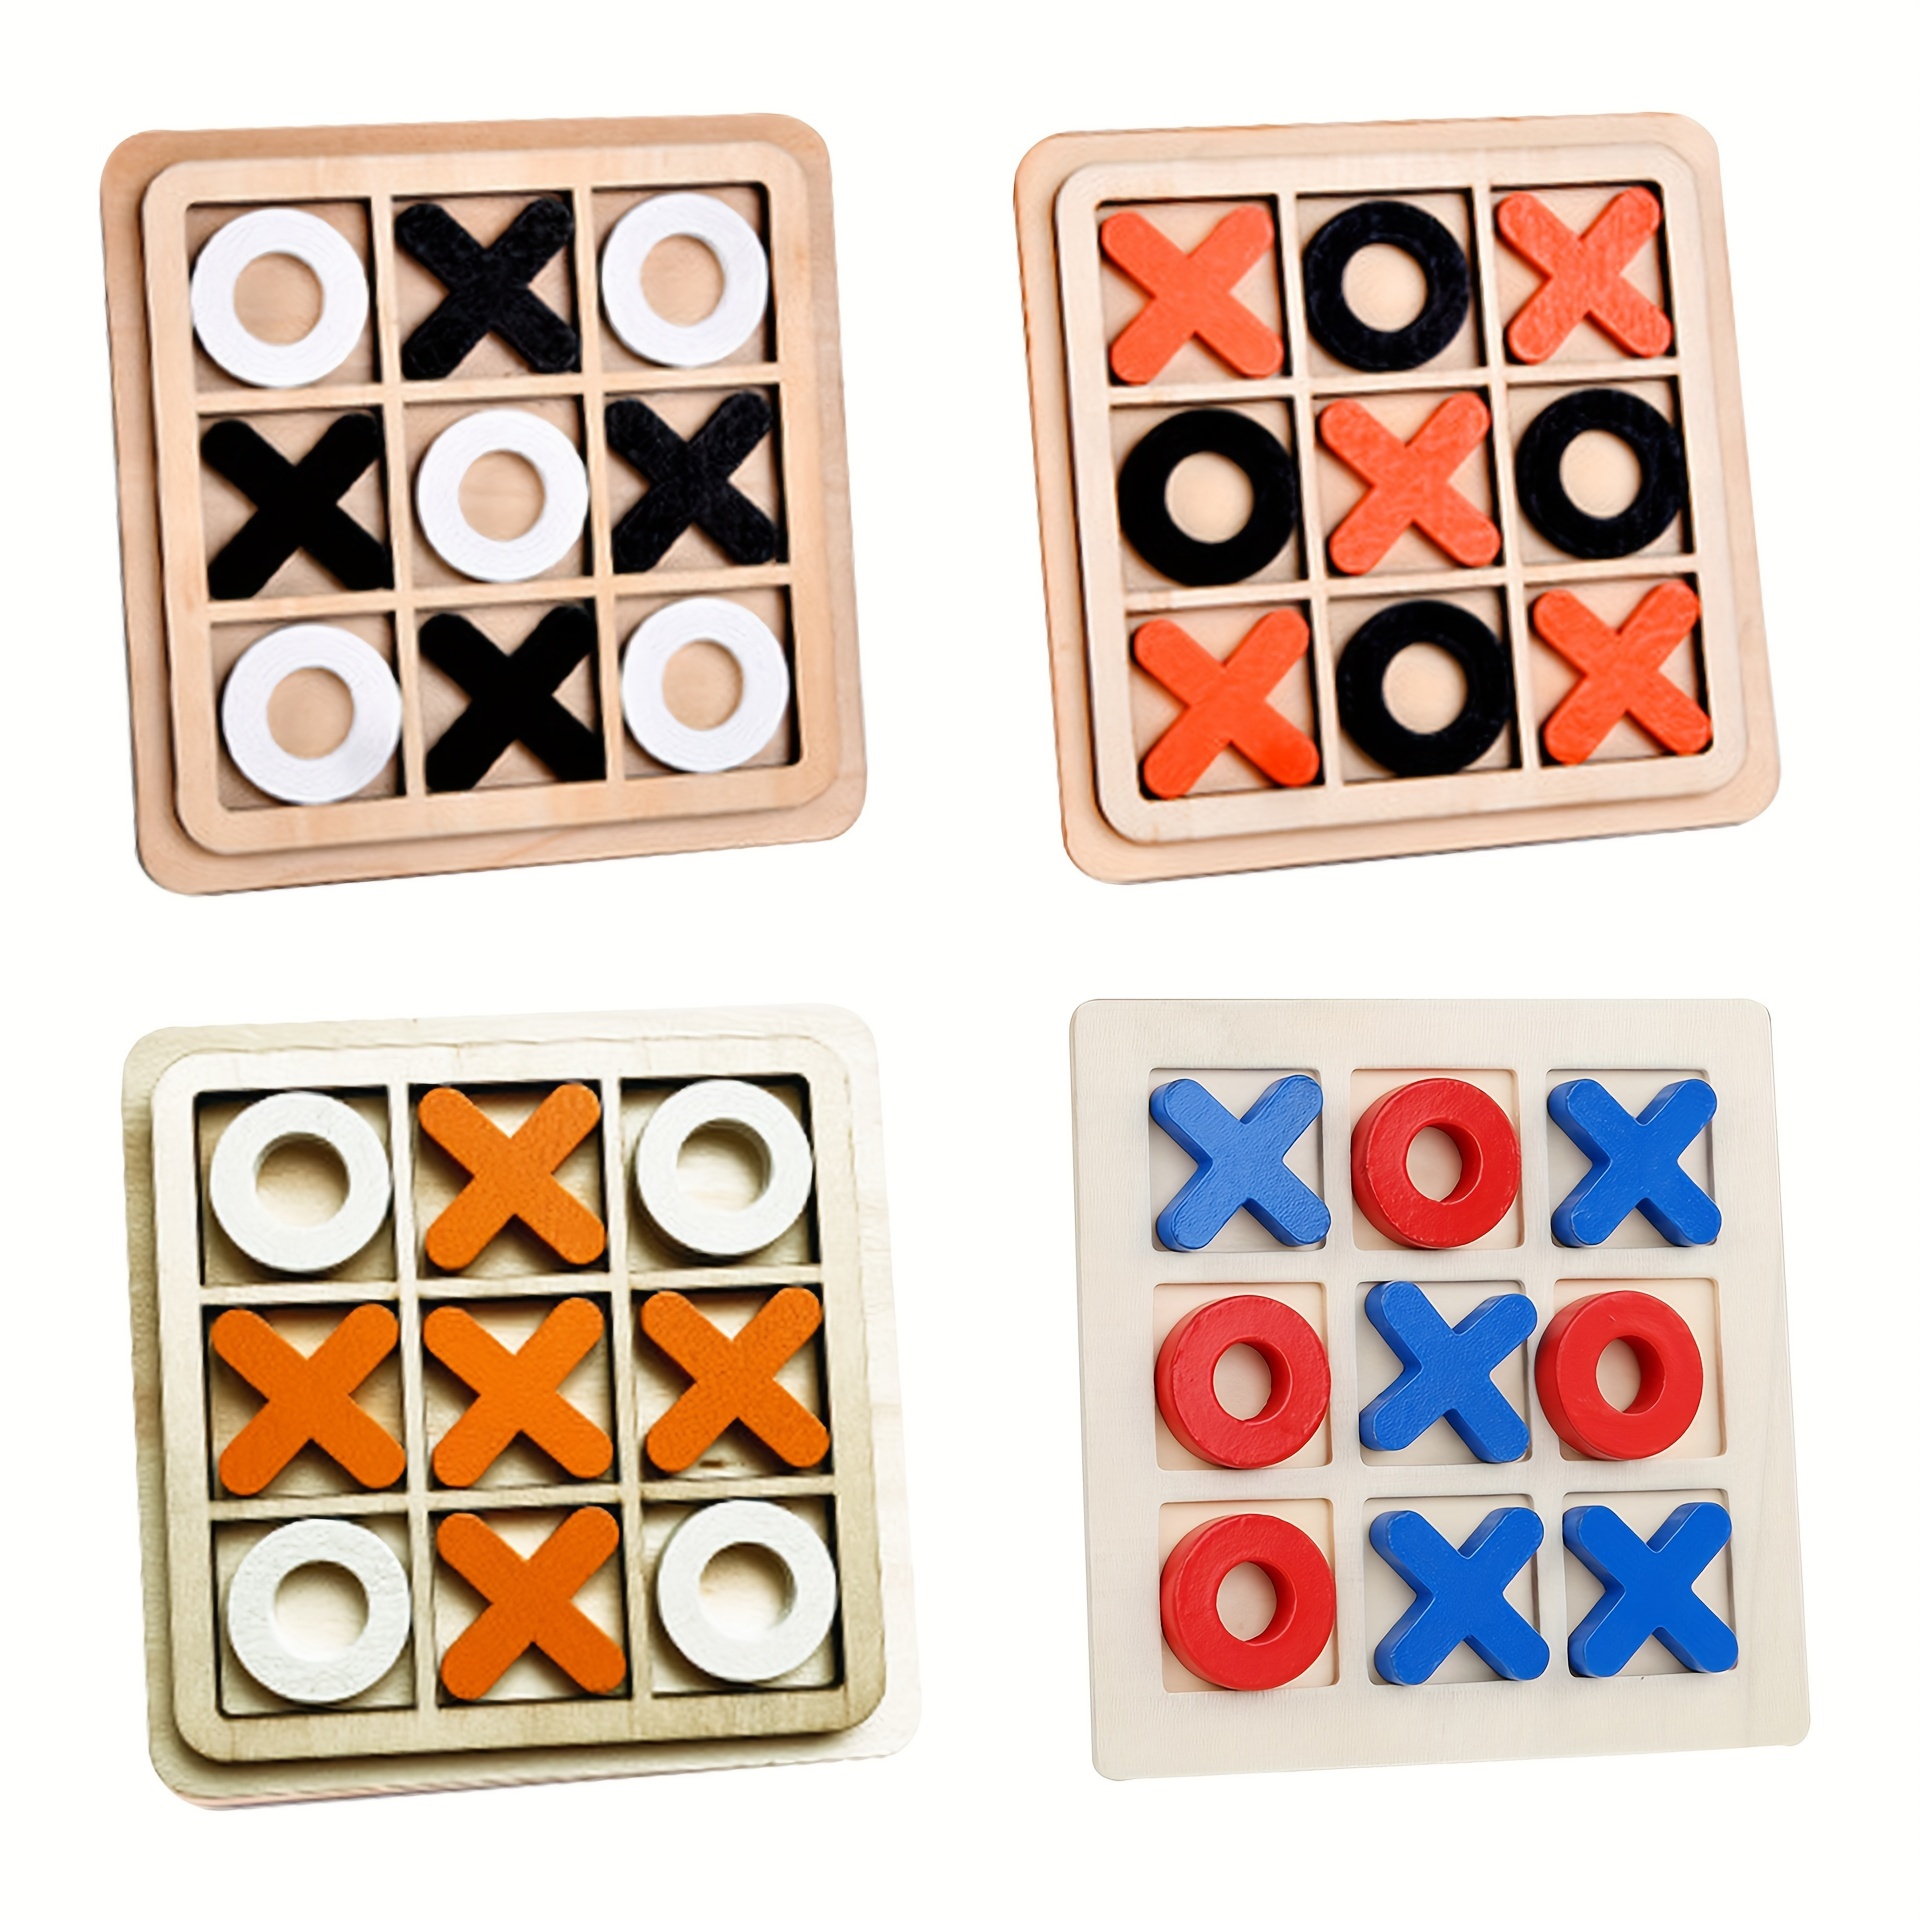 100pcs Scrabble Letters For Crafts Wood Scrabble Tiles Diy Wood Gift  Decoration